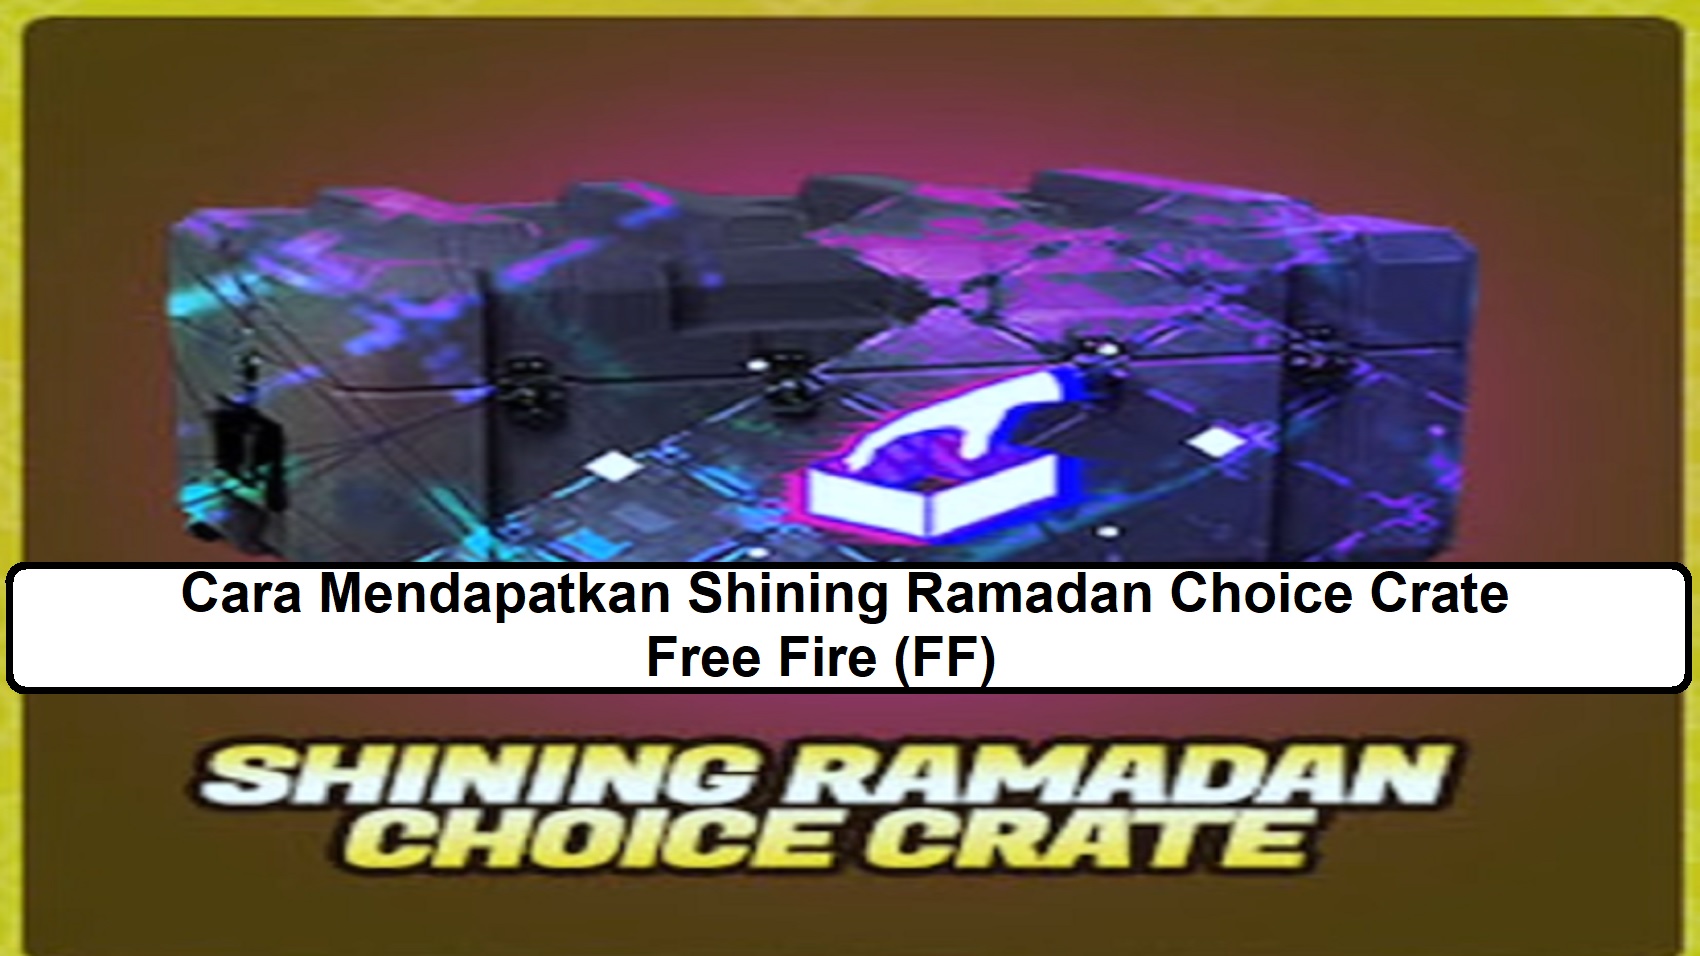 Cara Mendapatkan Shining Ramadan Choice Crate Free Fire (FF)